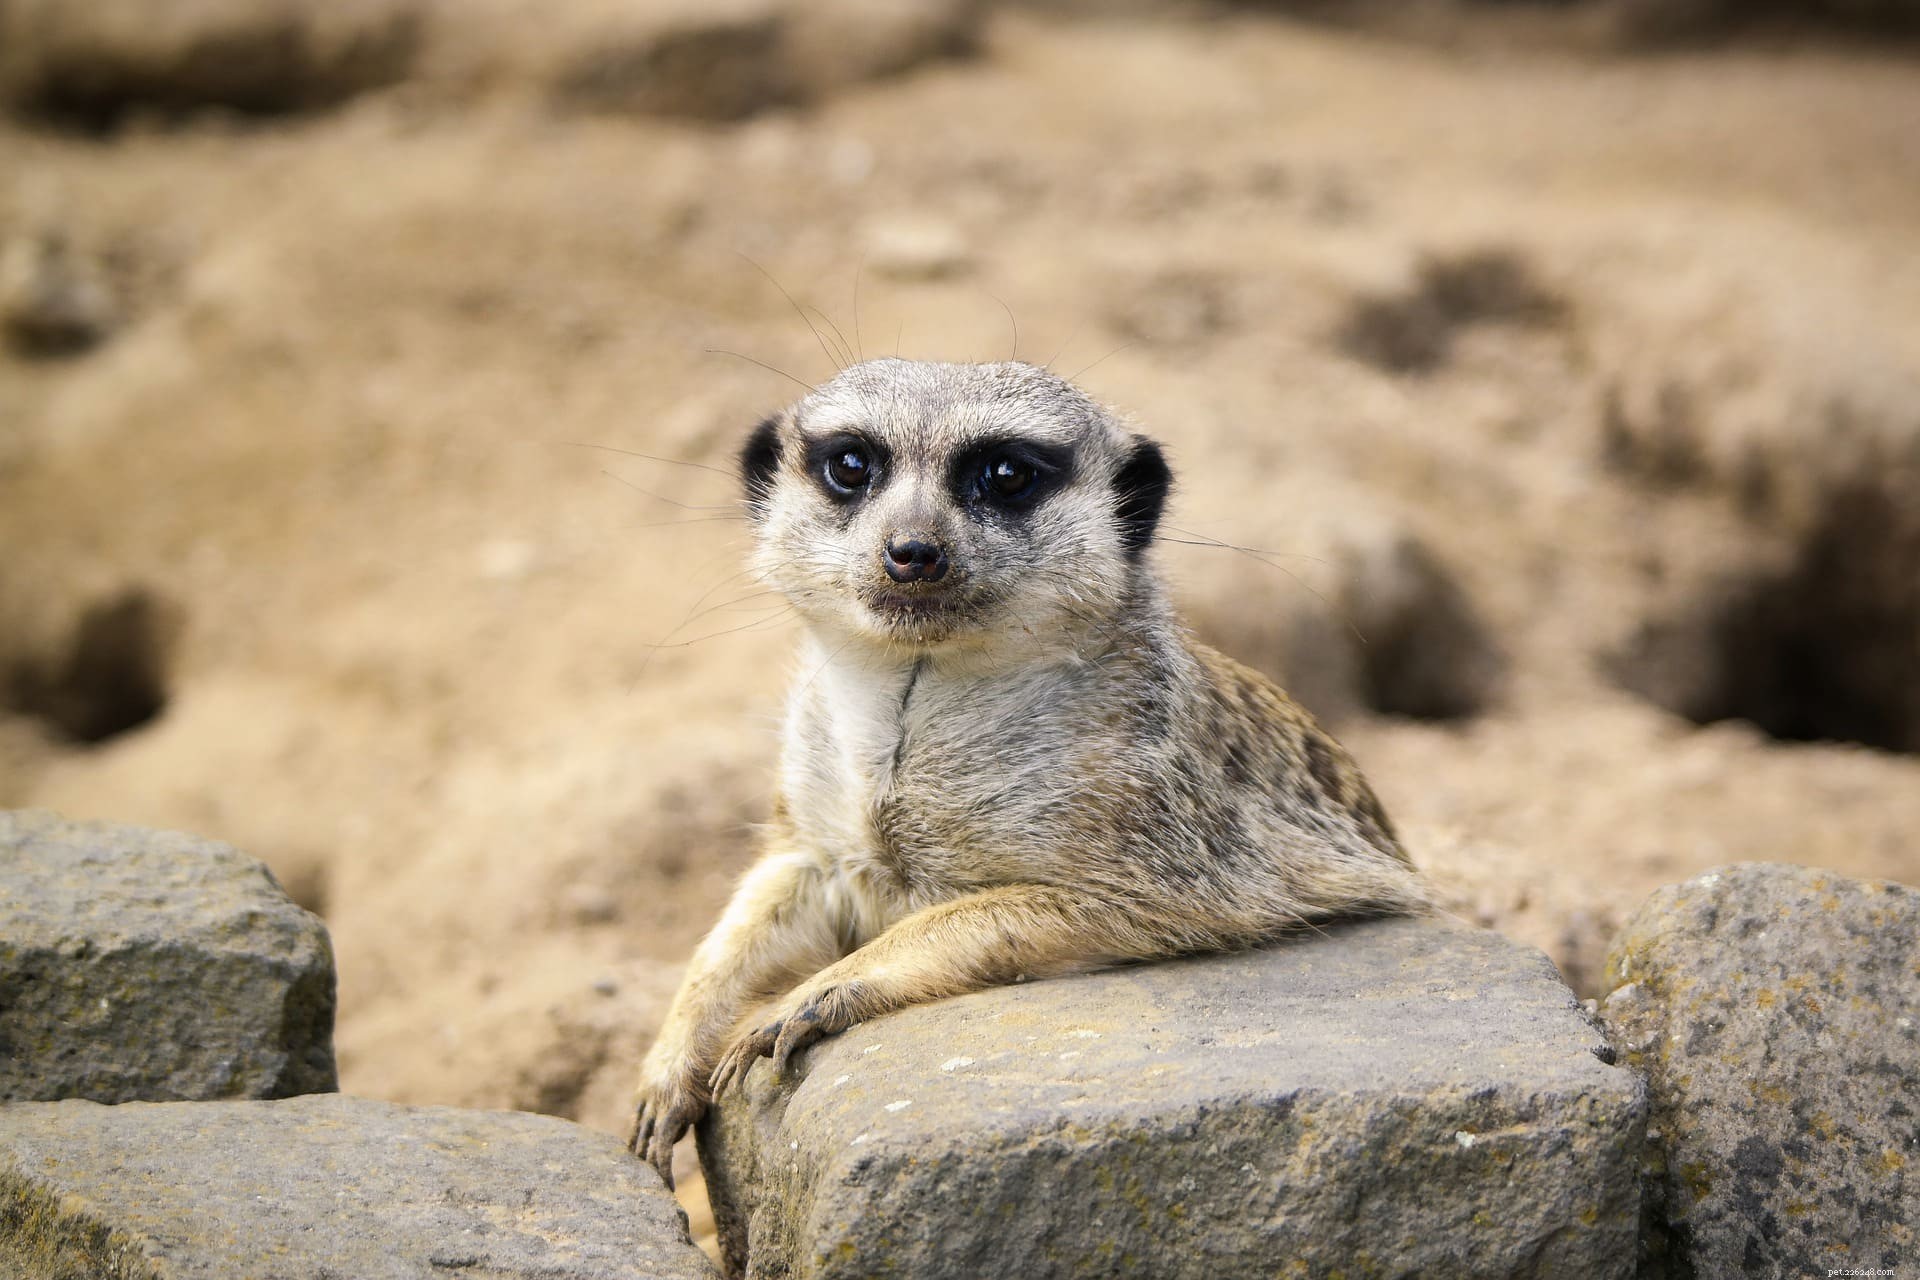 Gör Meerkats bra husdjur? (Legality, Care &More)